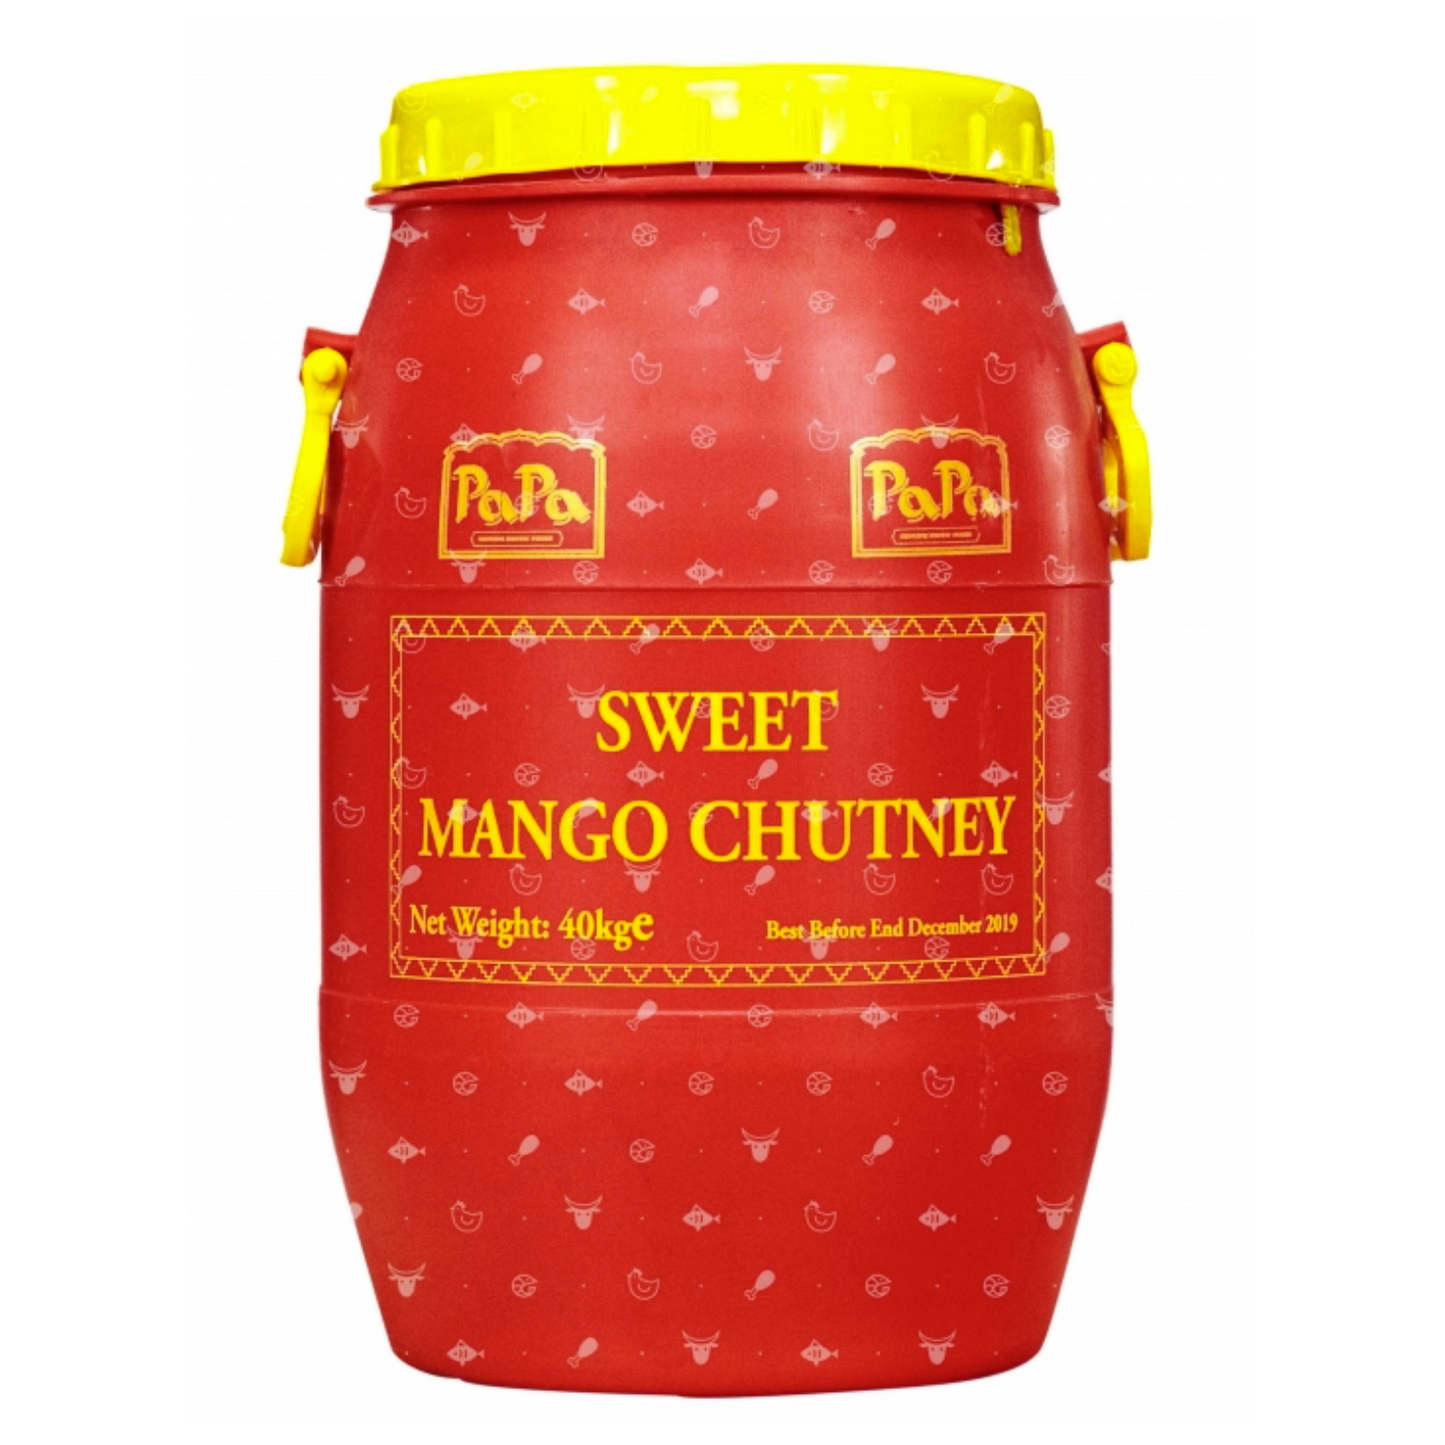 Mango Chutney - Papa